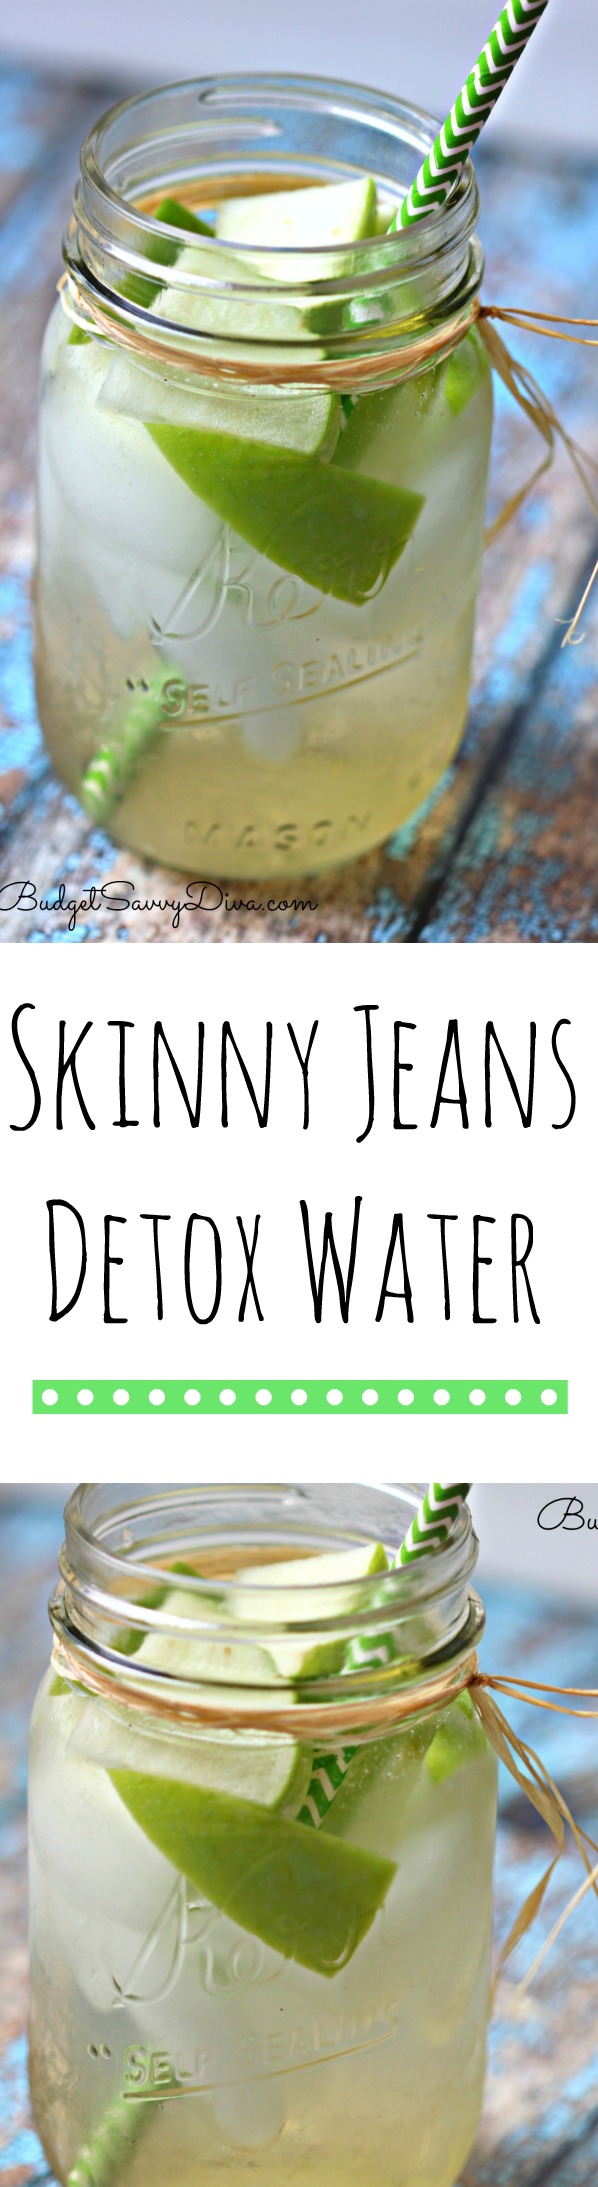 Skinny Jeans Detox Water Recipe 